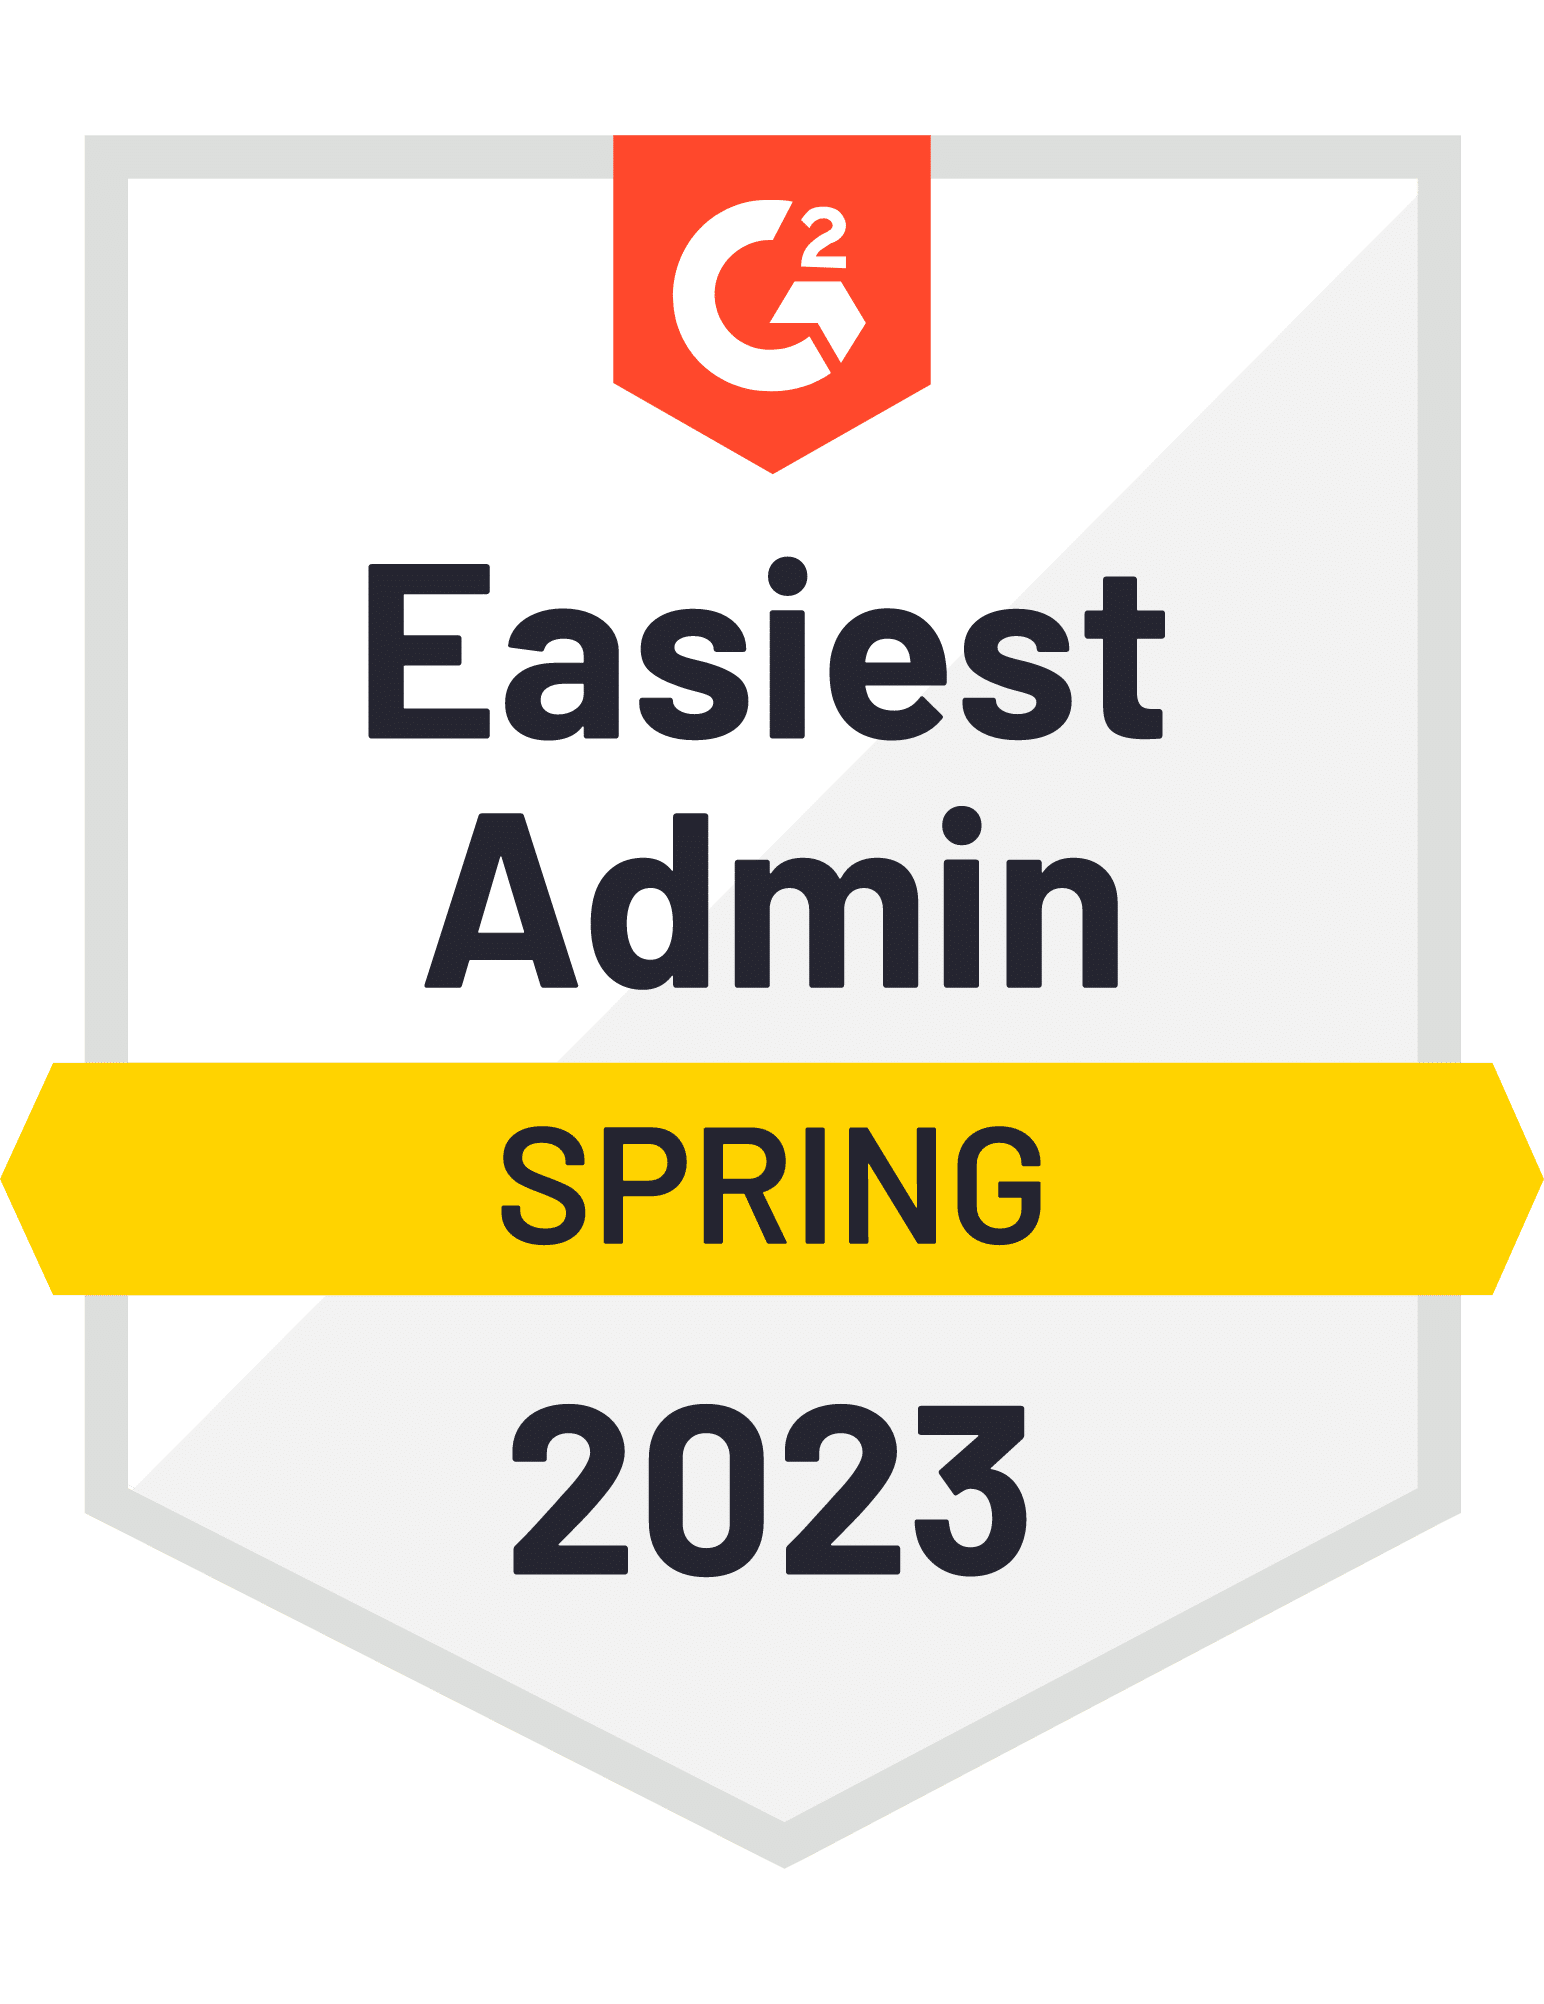 Easiest Admin Spring 2023 G2 Award